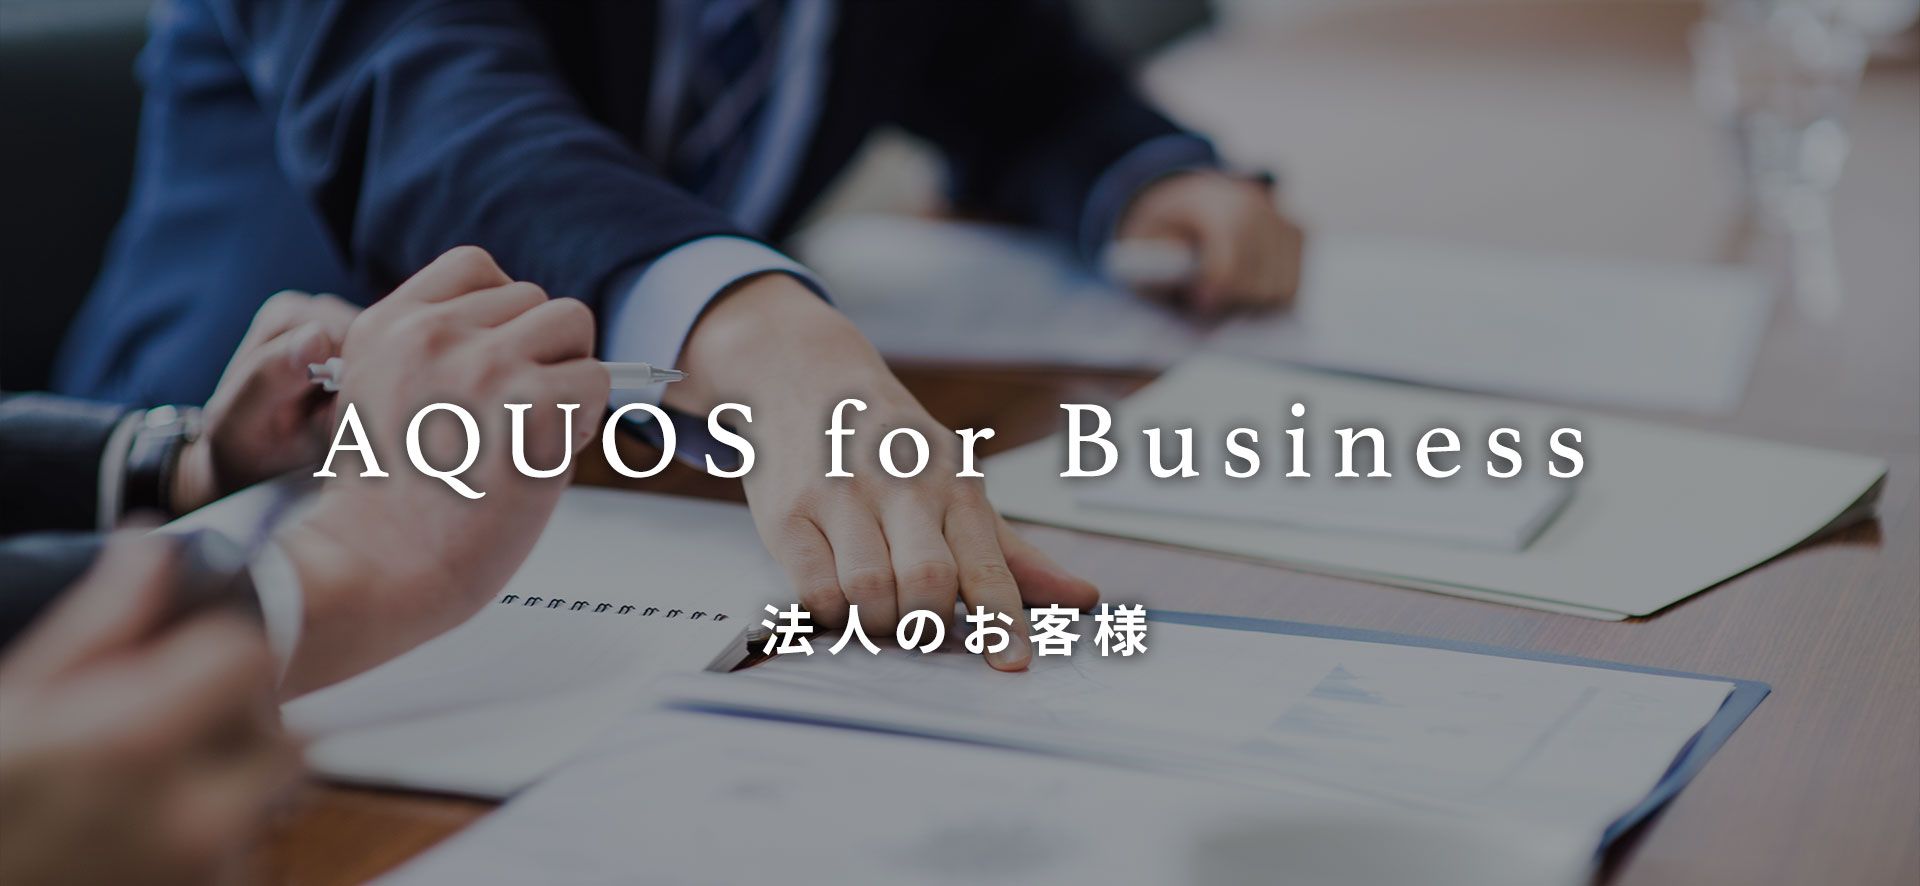 AQUOS for Business